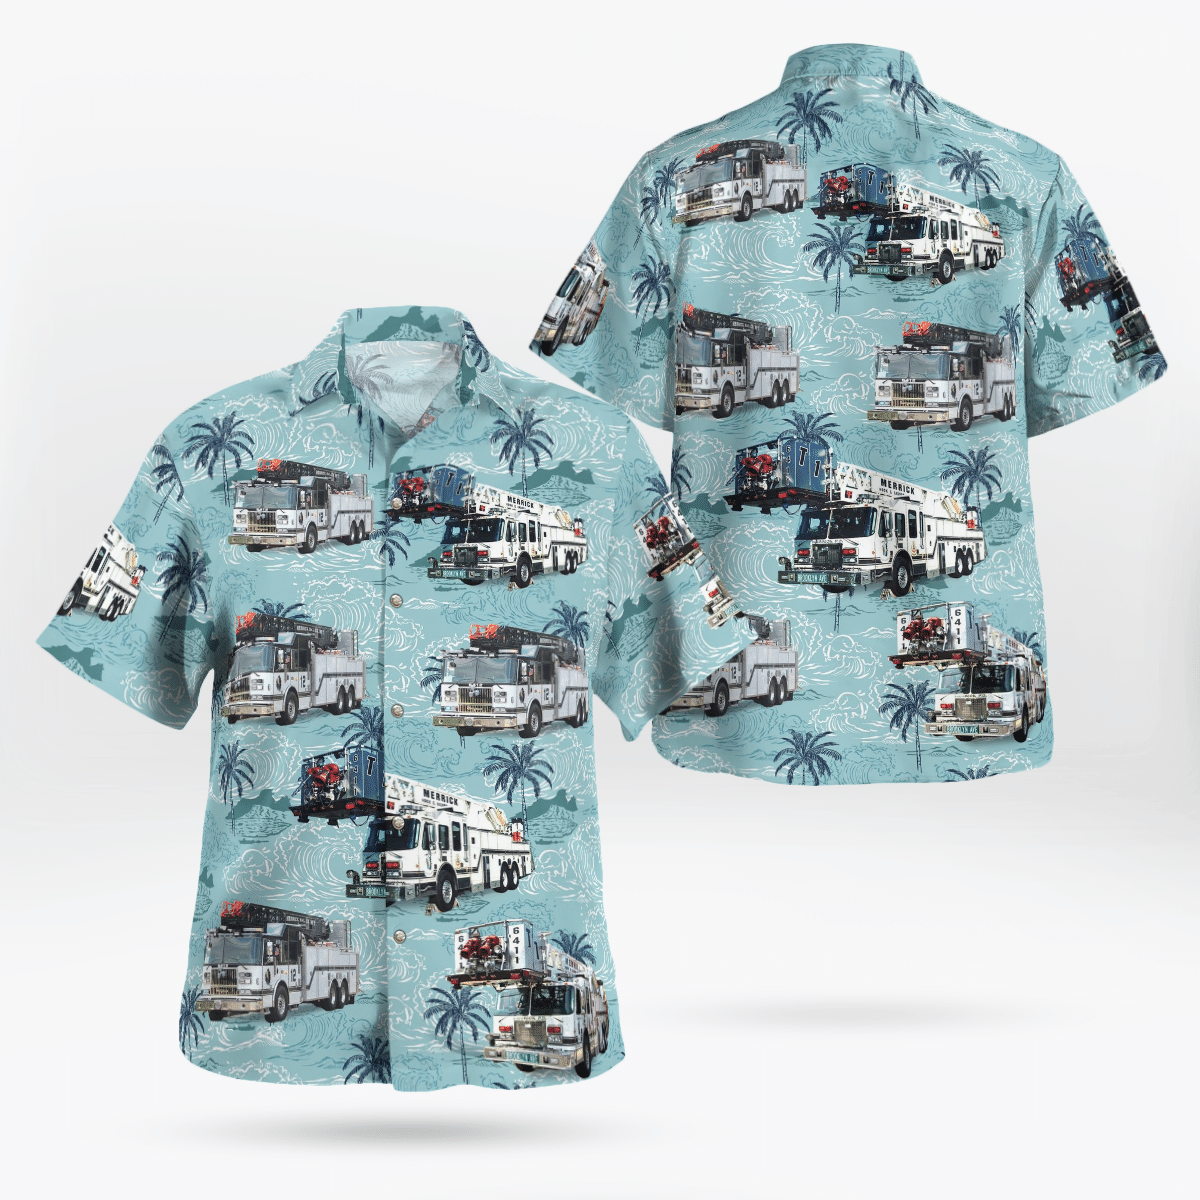 Listed below are some High-quality Aloha Shirt 393